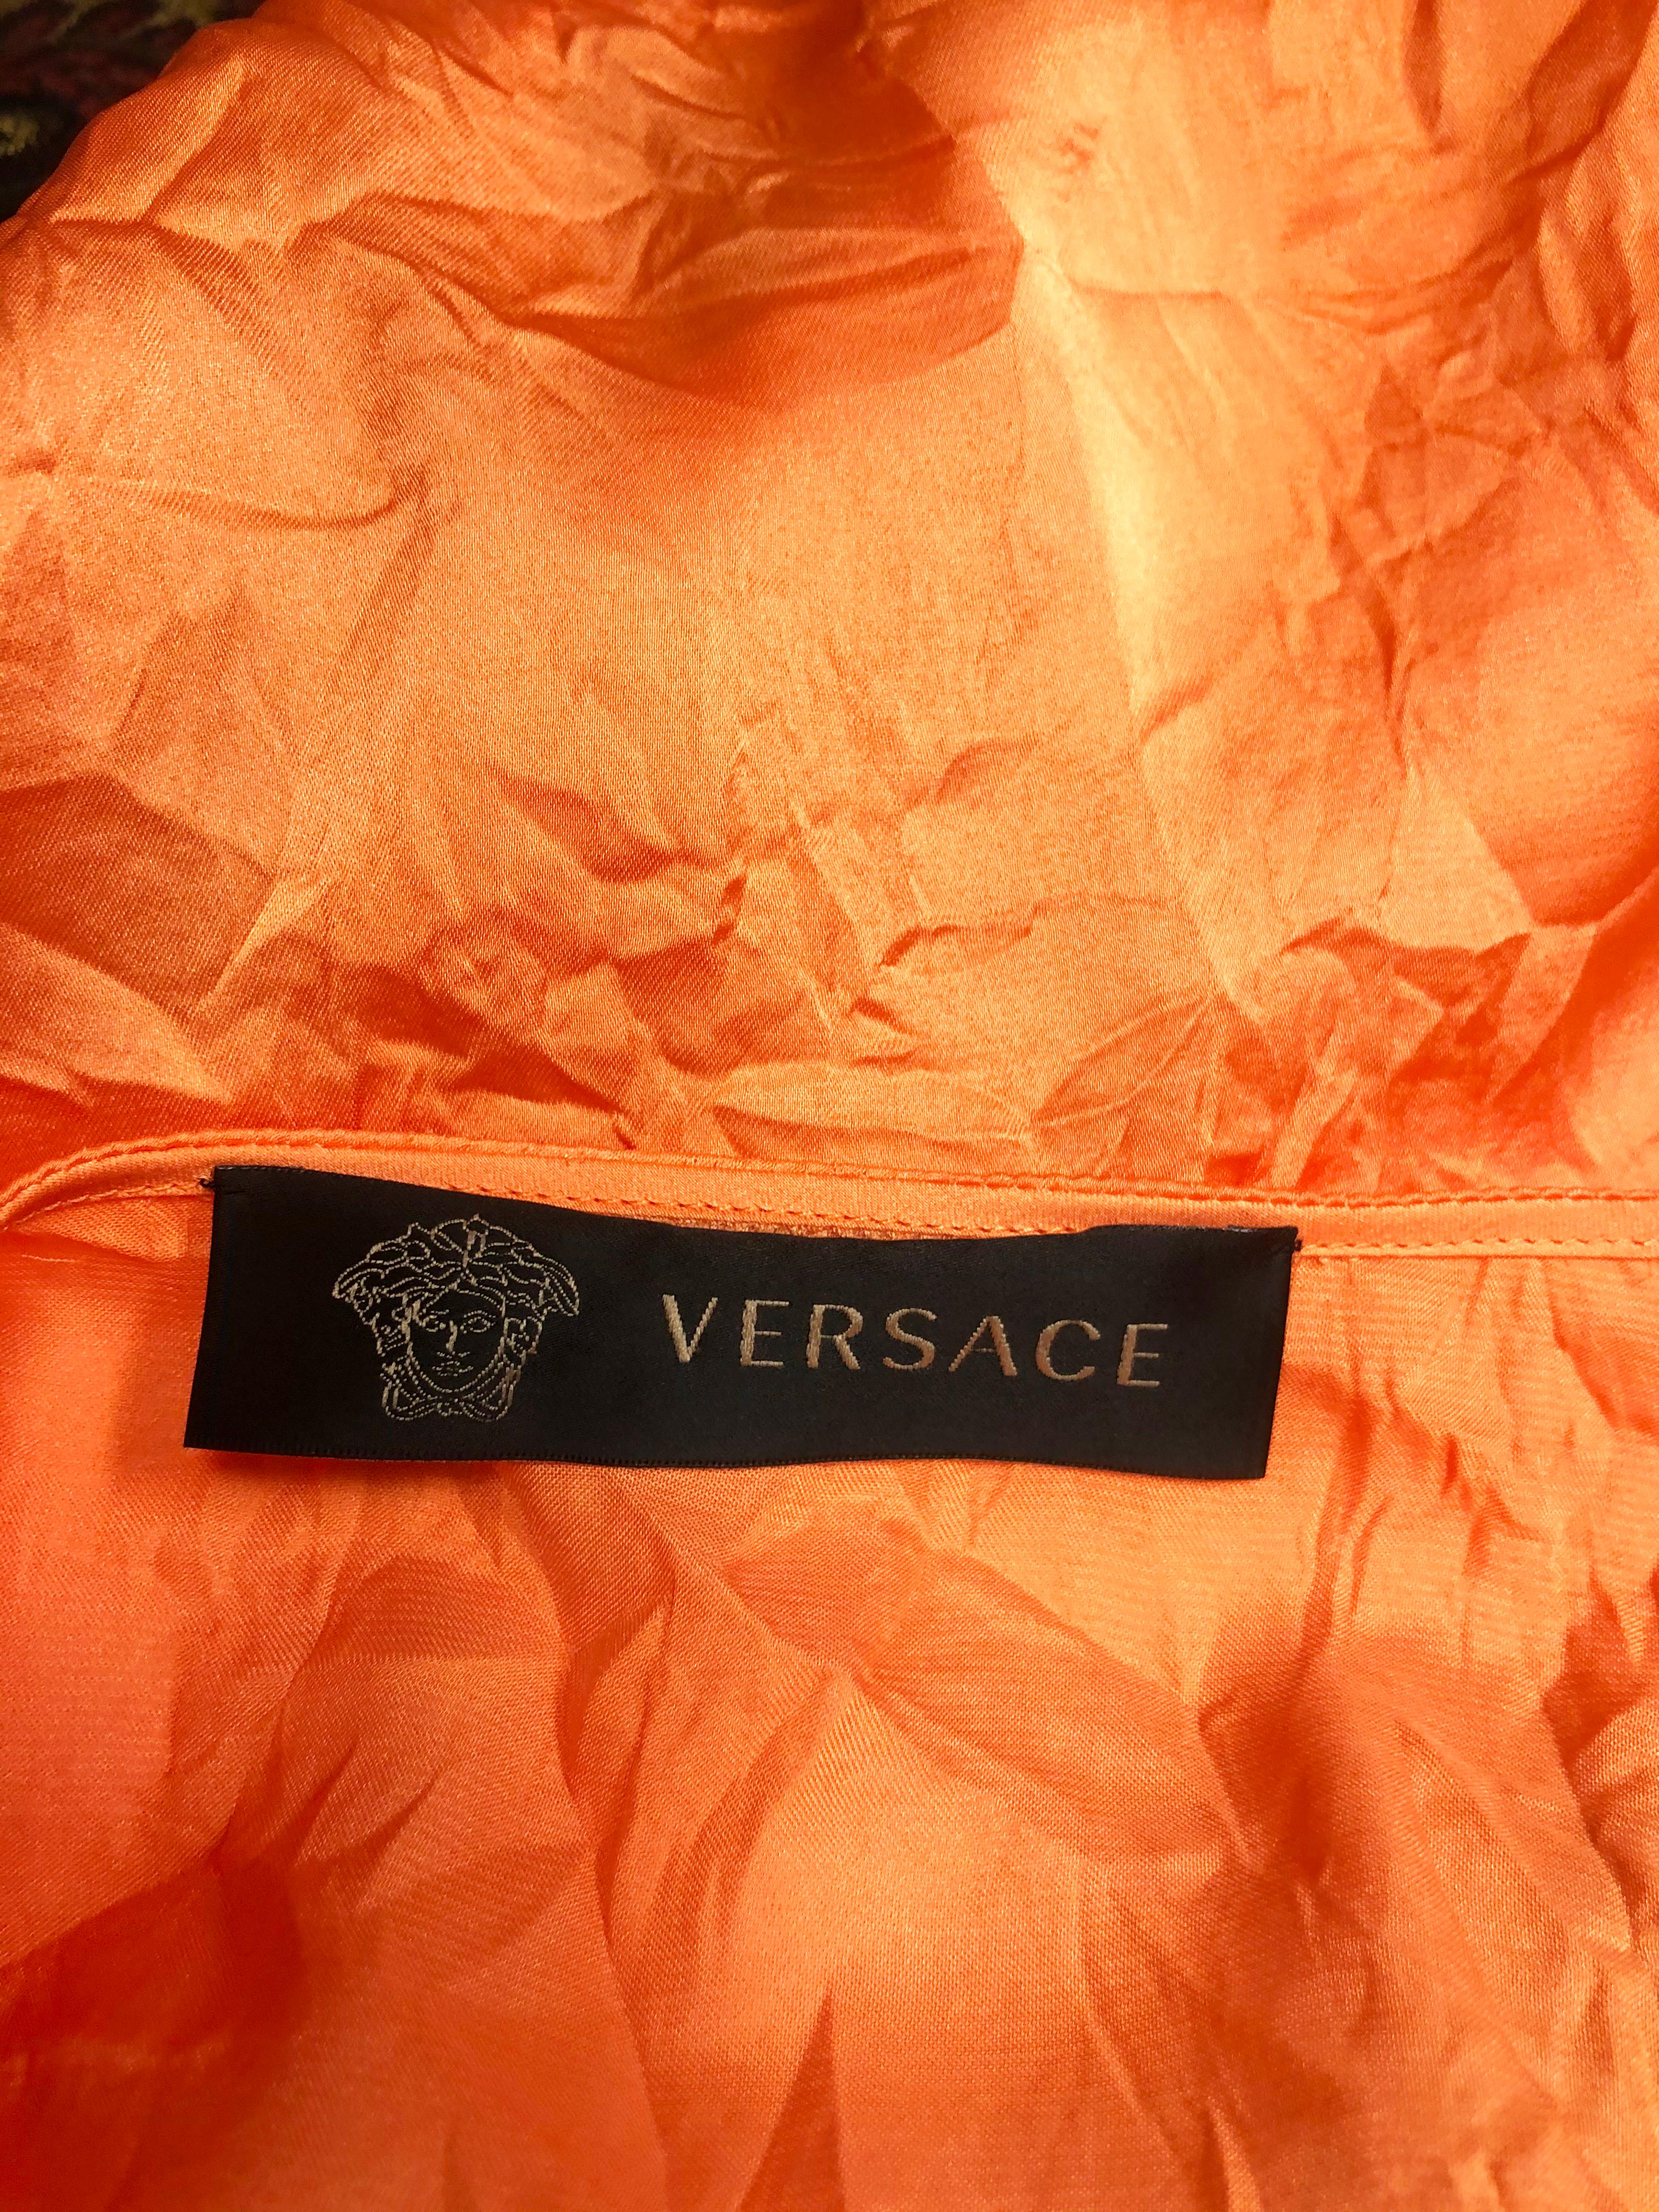 S/S13 L# 8 VERSACE - Robe en dentelle noire orange RACERBACK 40 - 4 38 - 2, 40 - 4  en vente 5